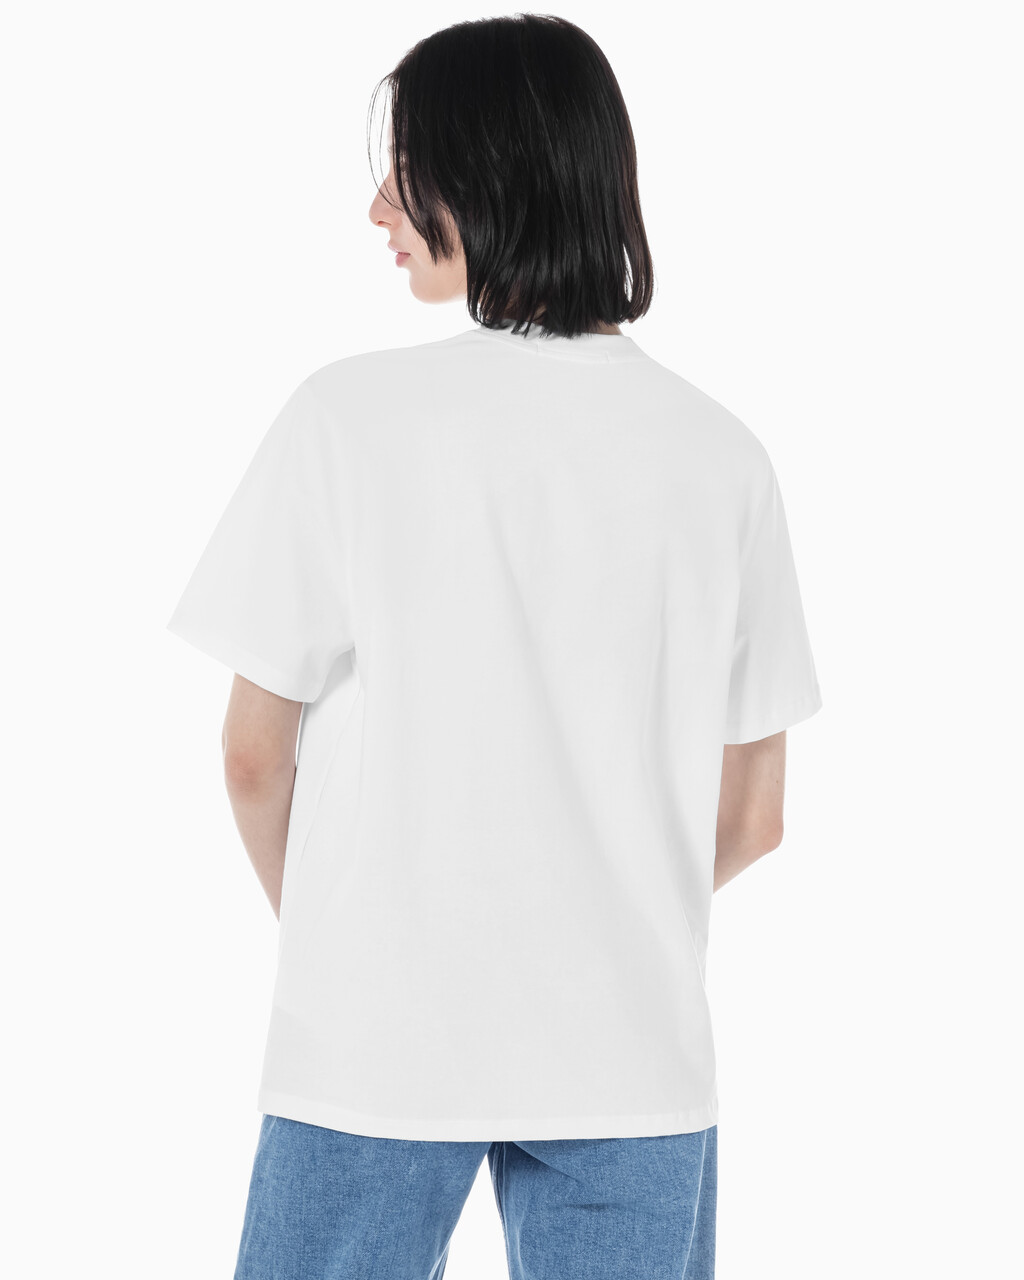 Buy 여성 보이프렌드핏 코튼 스트레치 반팔 티셔츠 in color BRIGHT WHITE